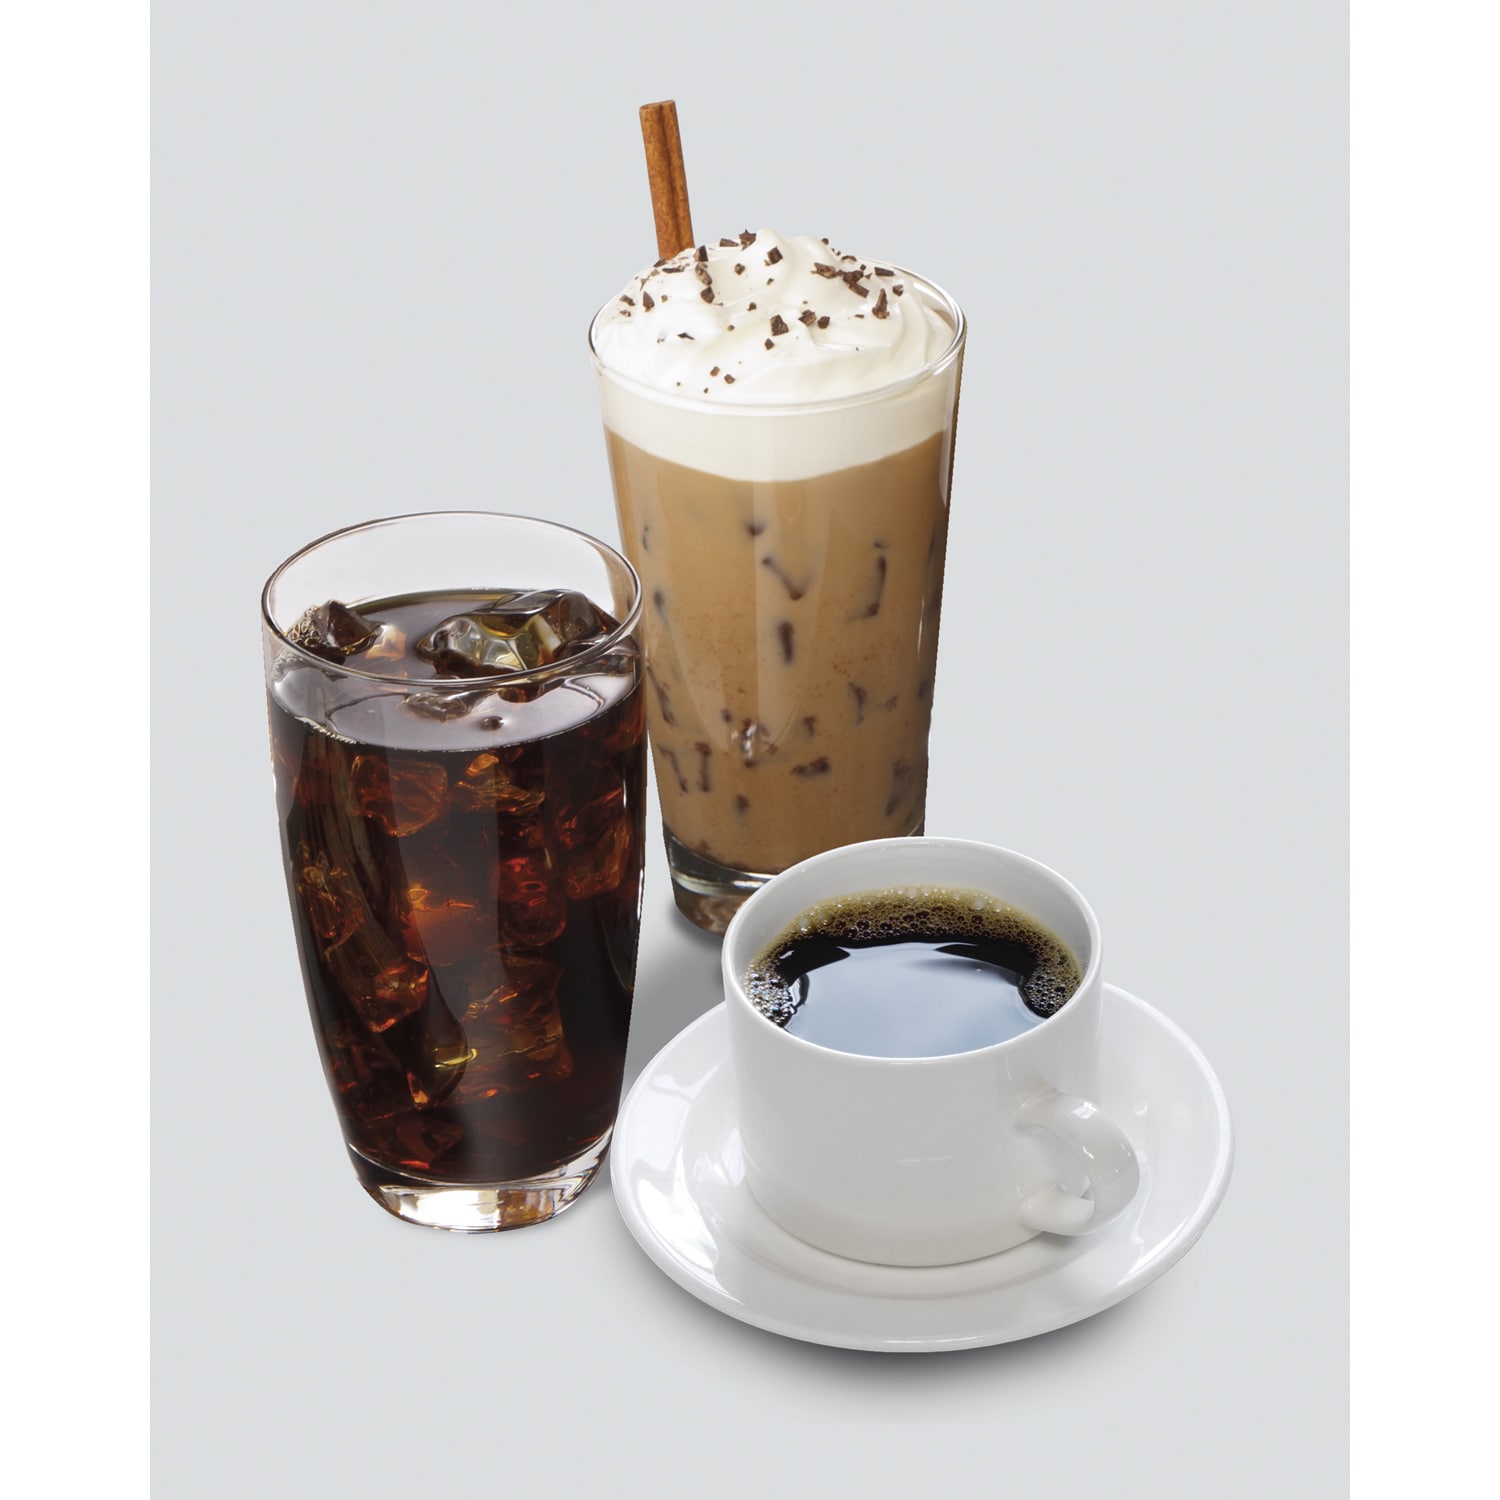 Best Buy: Hamilton Beach BrewStation 12 Cup Dispensing Coffeemaker Black  48463